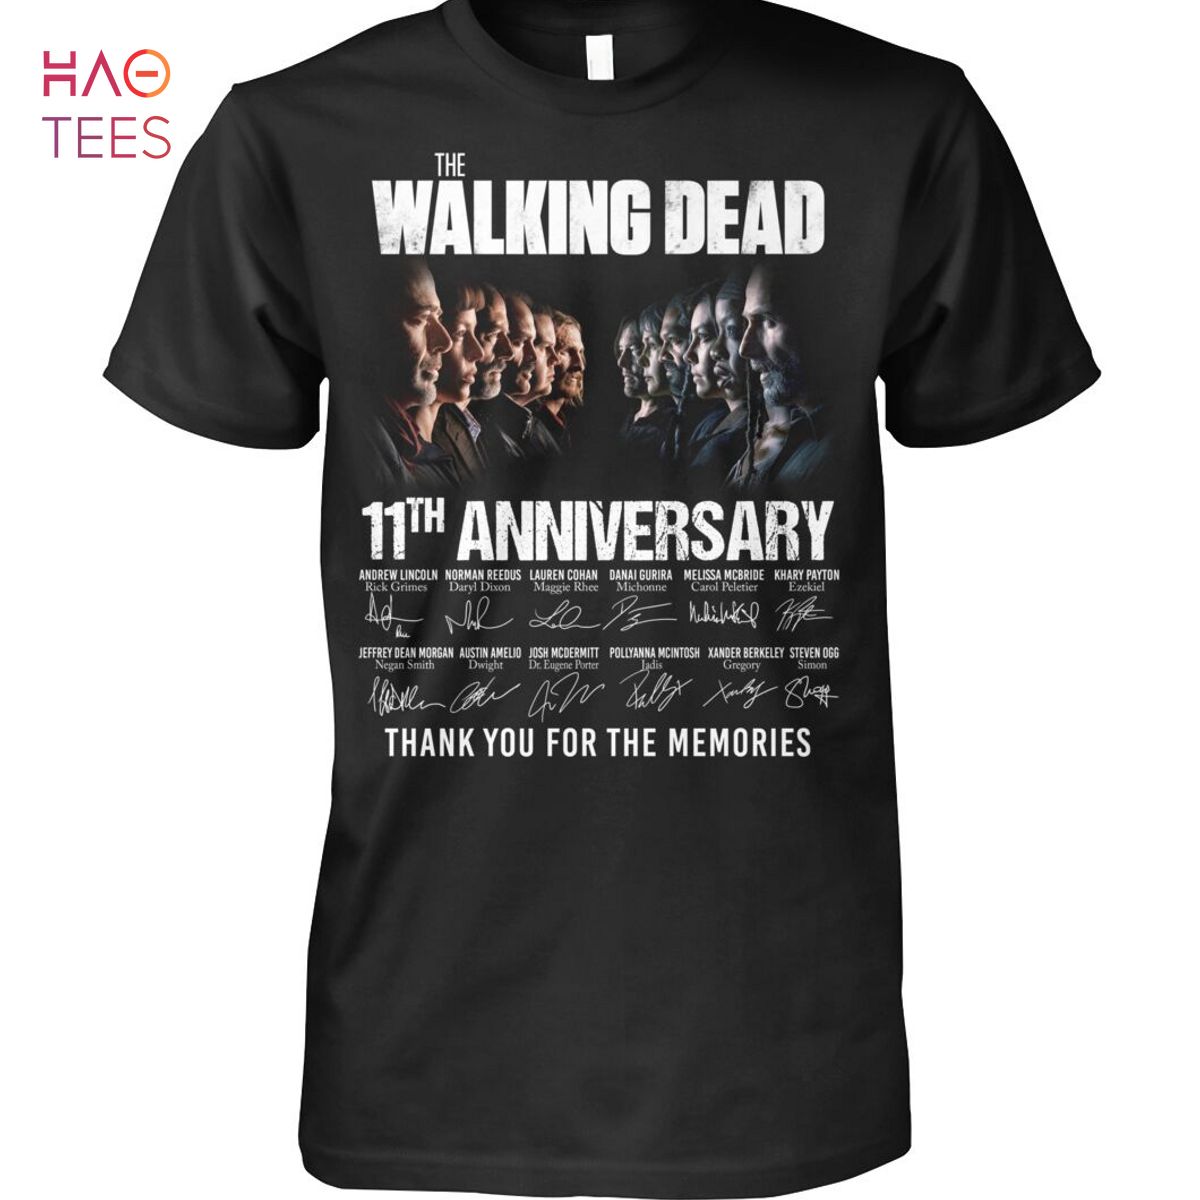 The Walking Dead 11 Anniversary Shirt